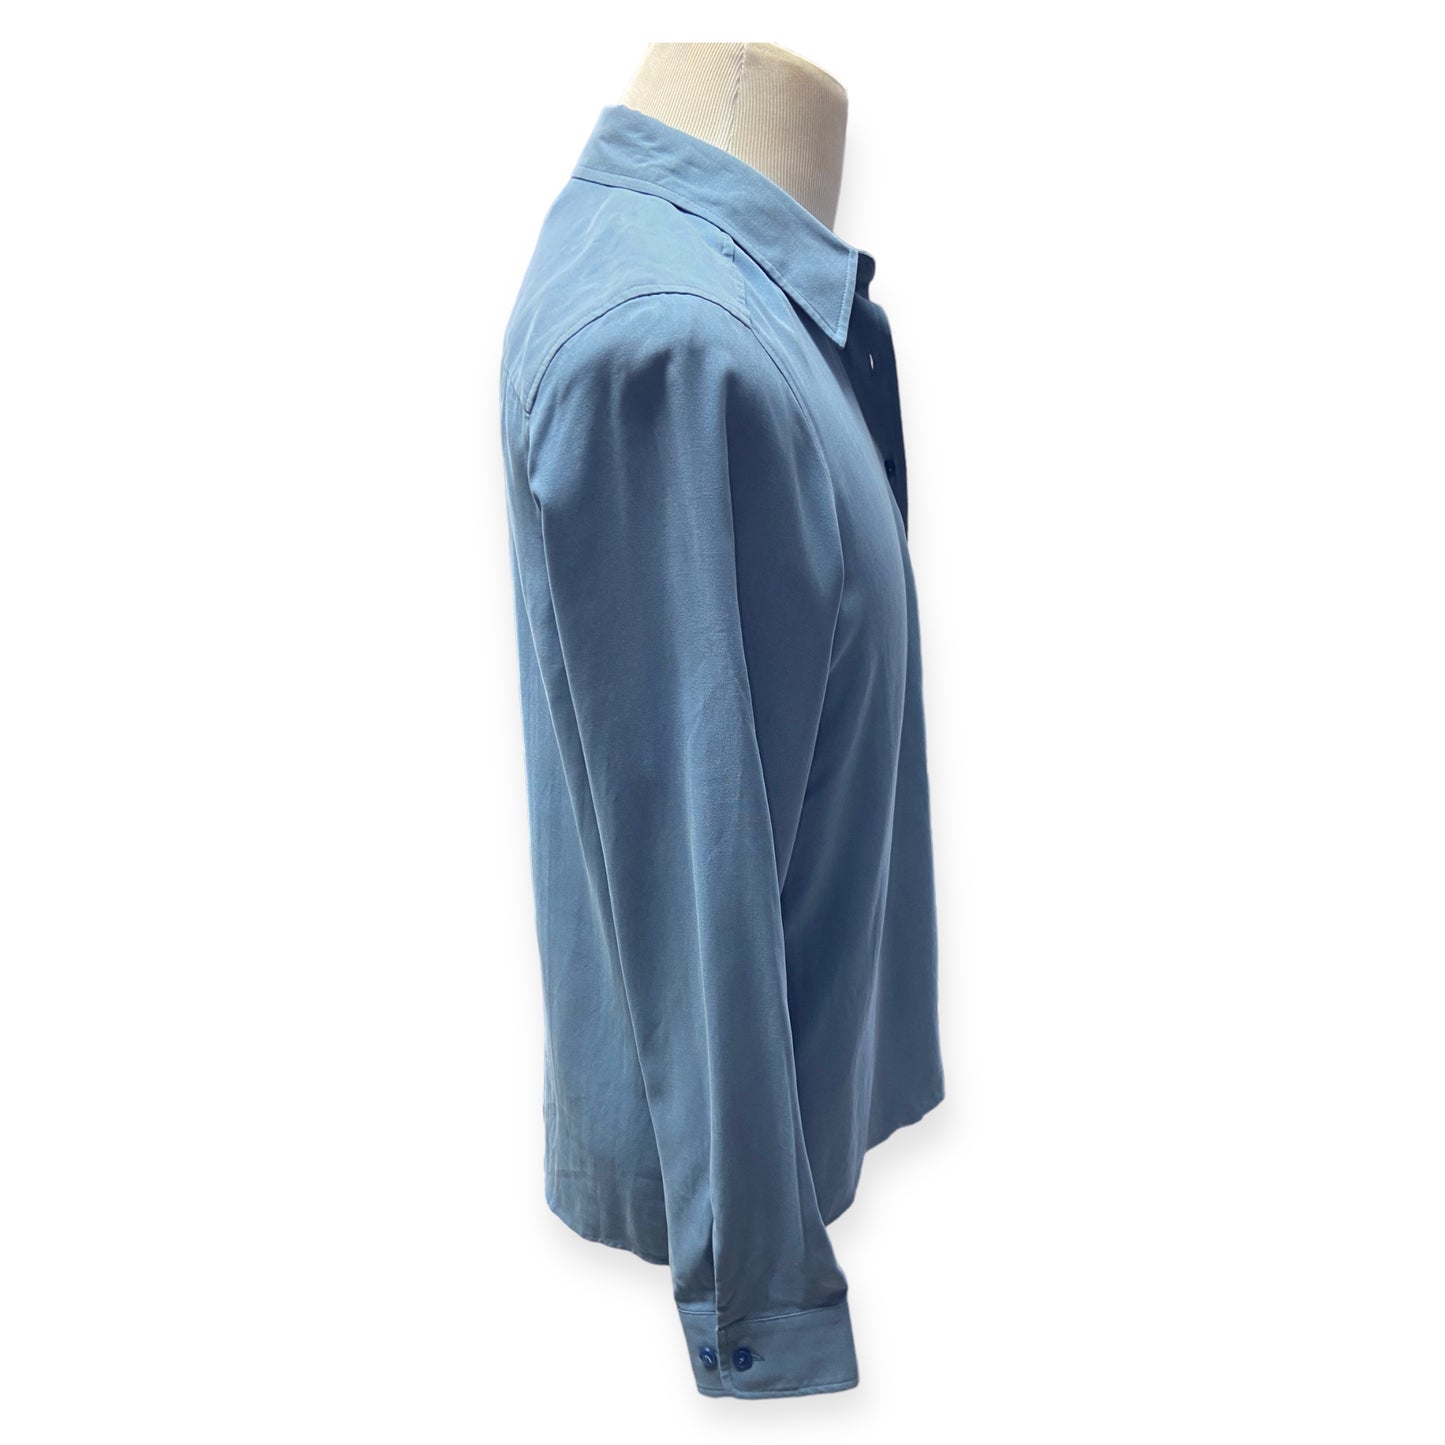 Orvis Ruddy Blue Felt Button Down Shirt (Size M)